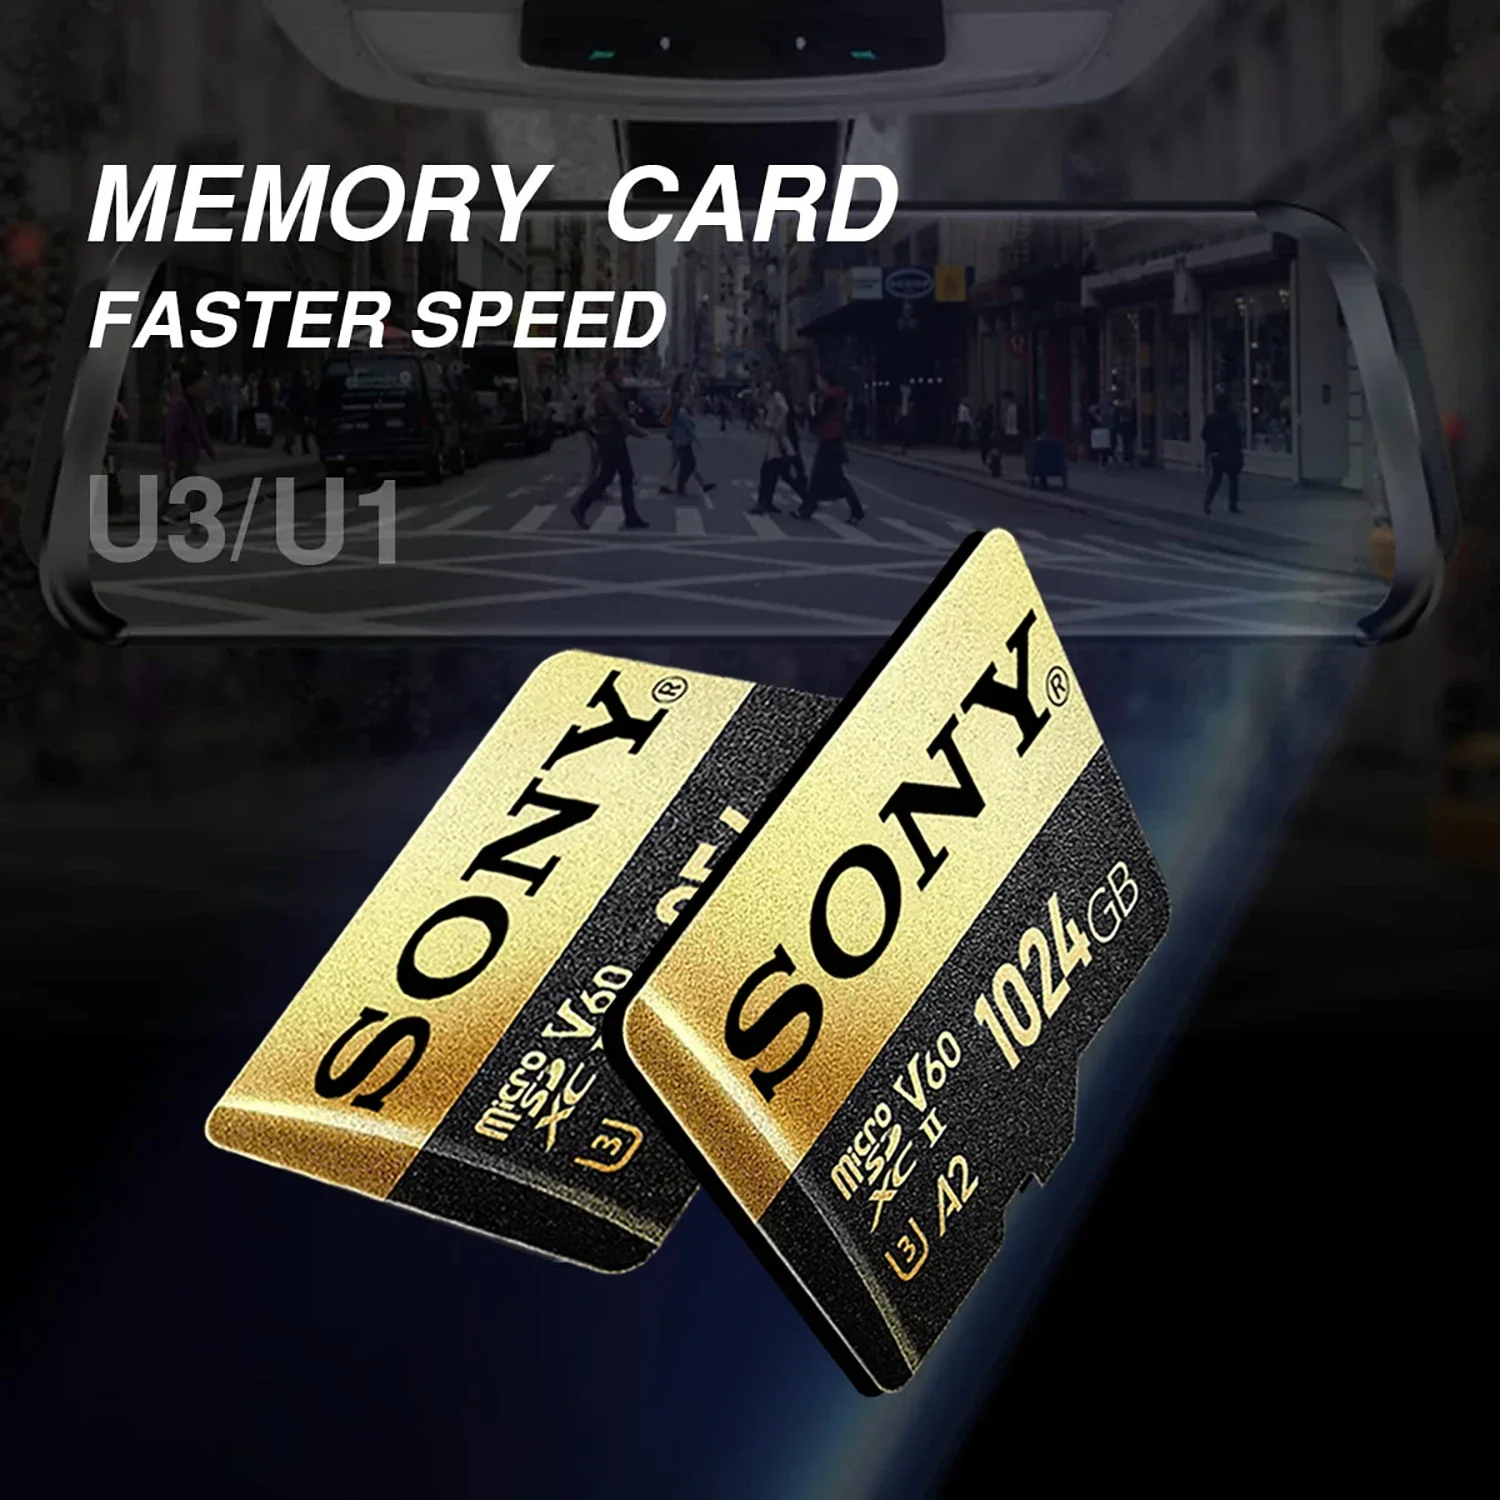 1TB SONY Ultra Micro SD/TF Flash Memory Card 128GB 256GB 1TB 512GB Micro SD Card 32 64 128 GB MicroSD Dropshipping For Phone